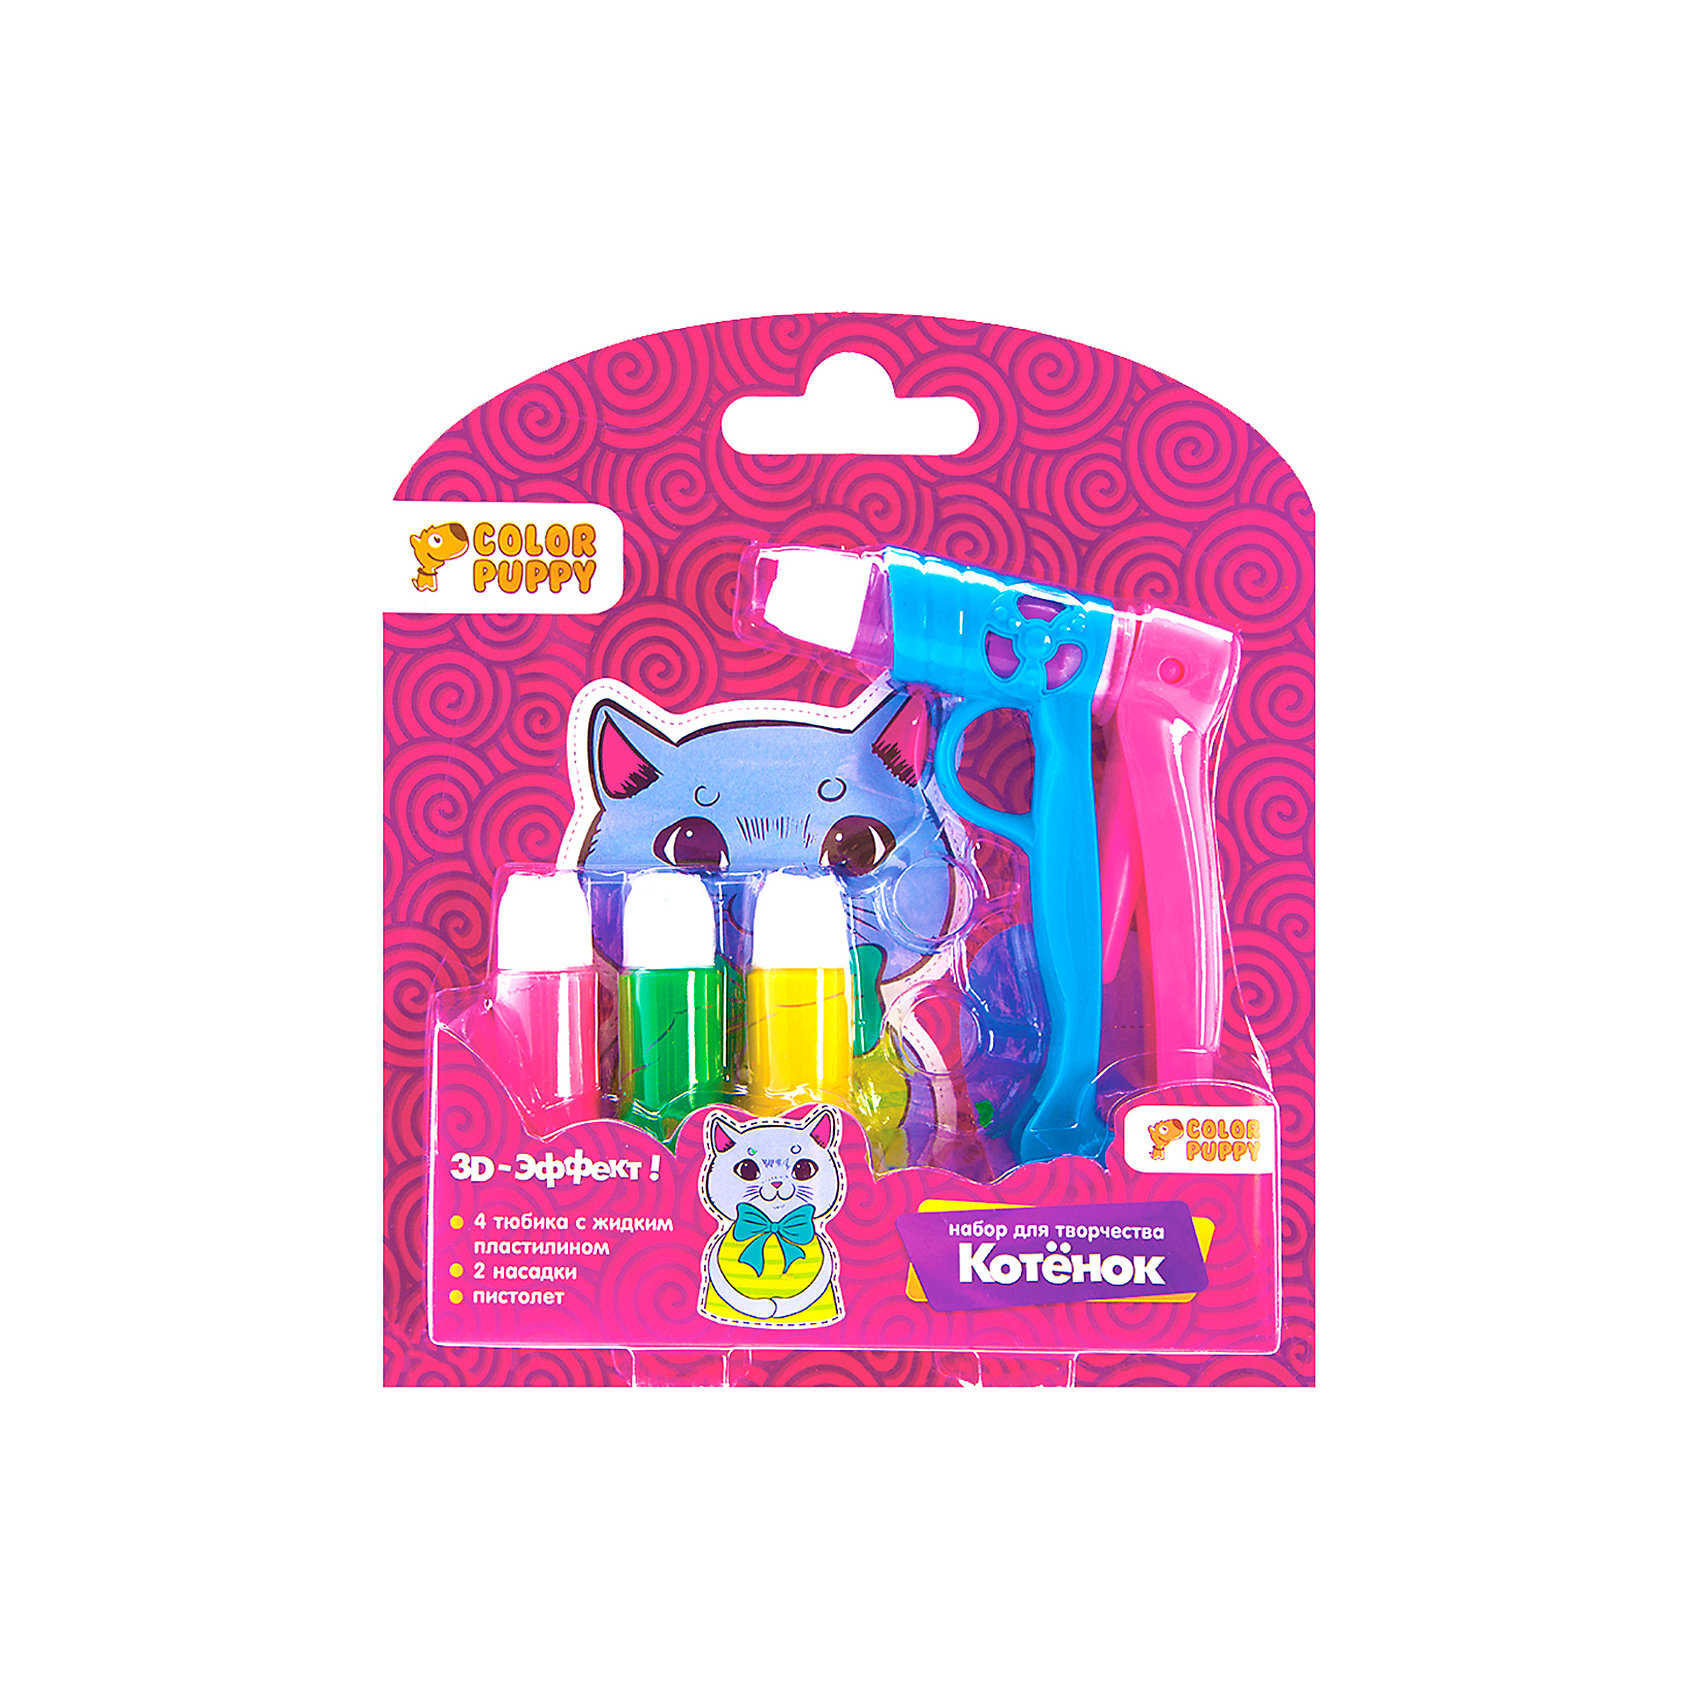 Color Puppy набор для творчества. Пластилин Color Puppy 2 цвета с пистолетом. Лента набор с жидким пластилином. Жидкий пластилин